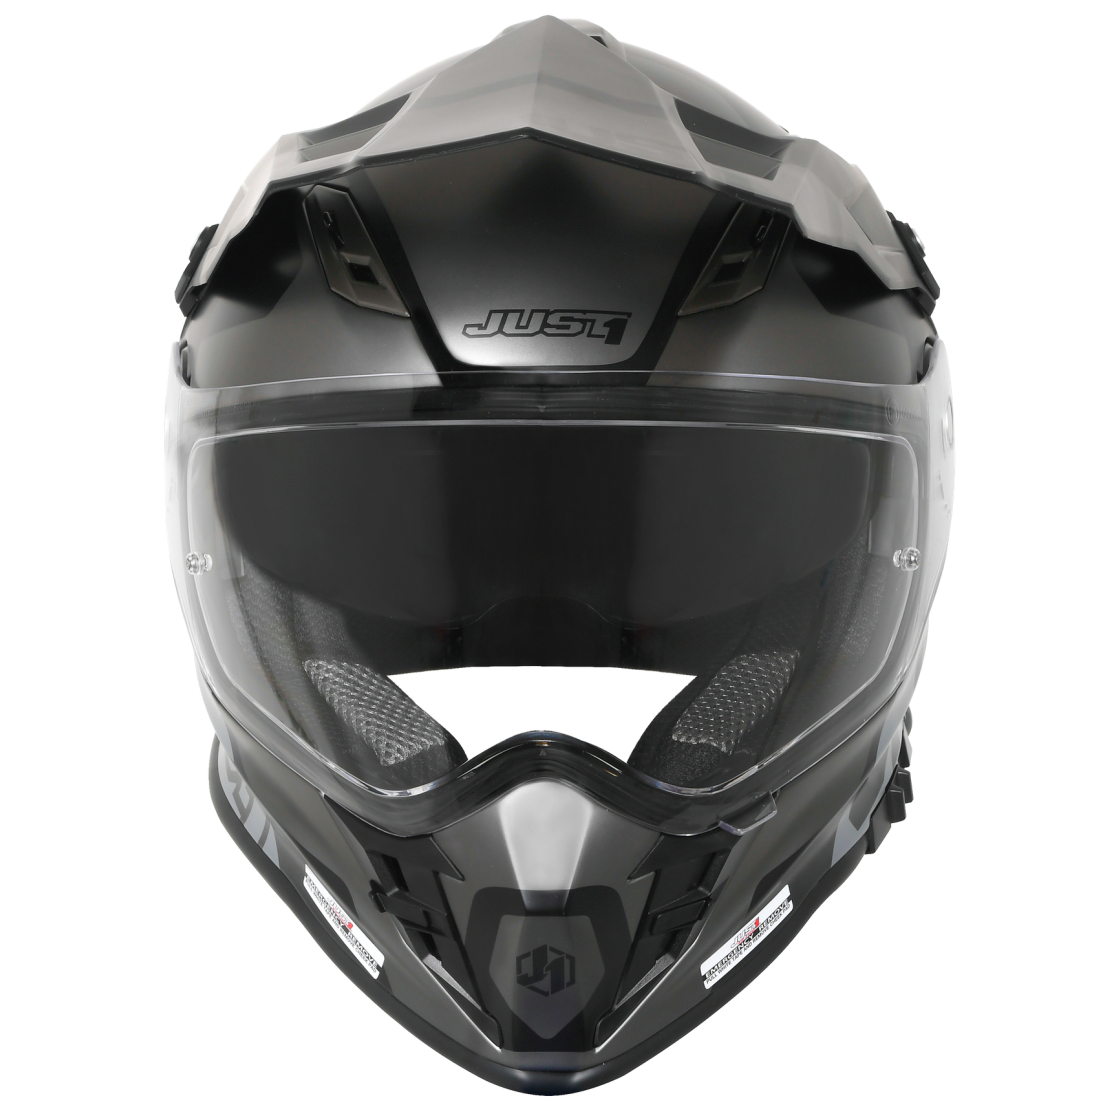 JUST1 J34 Pro Tour Helmet